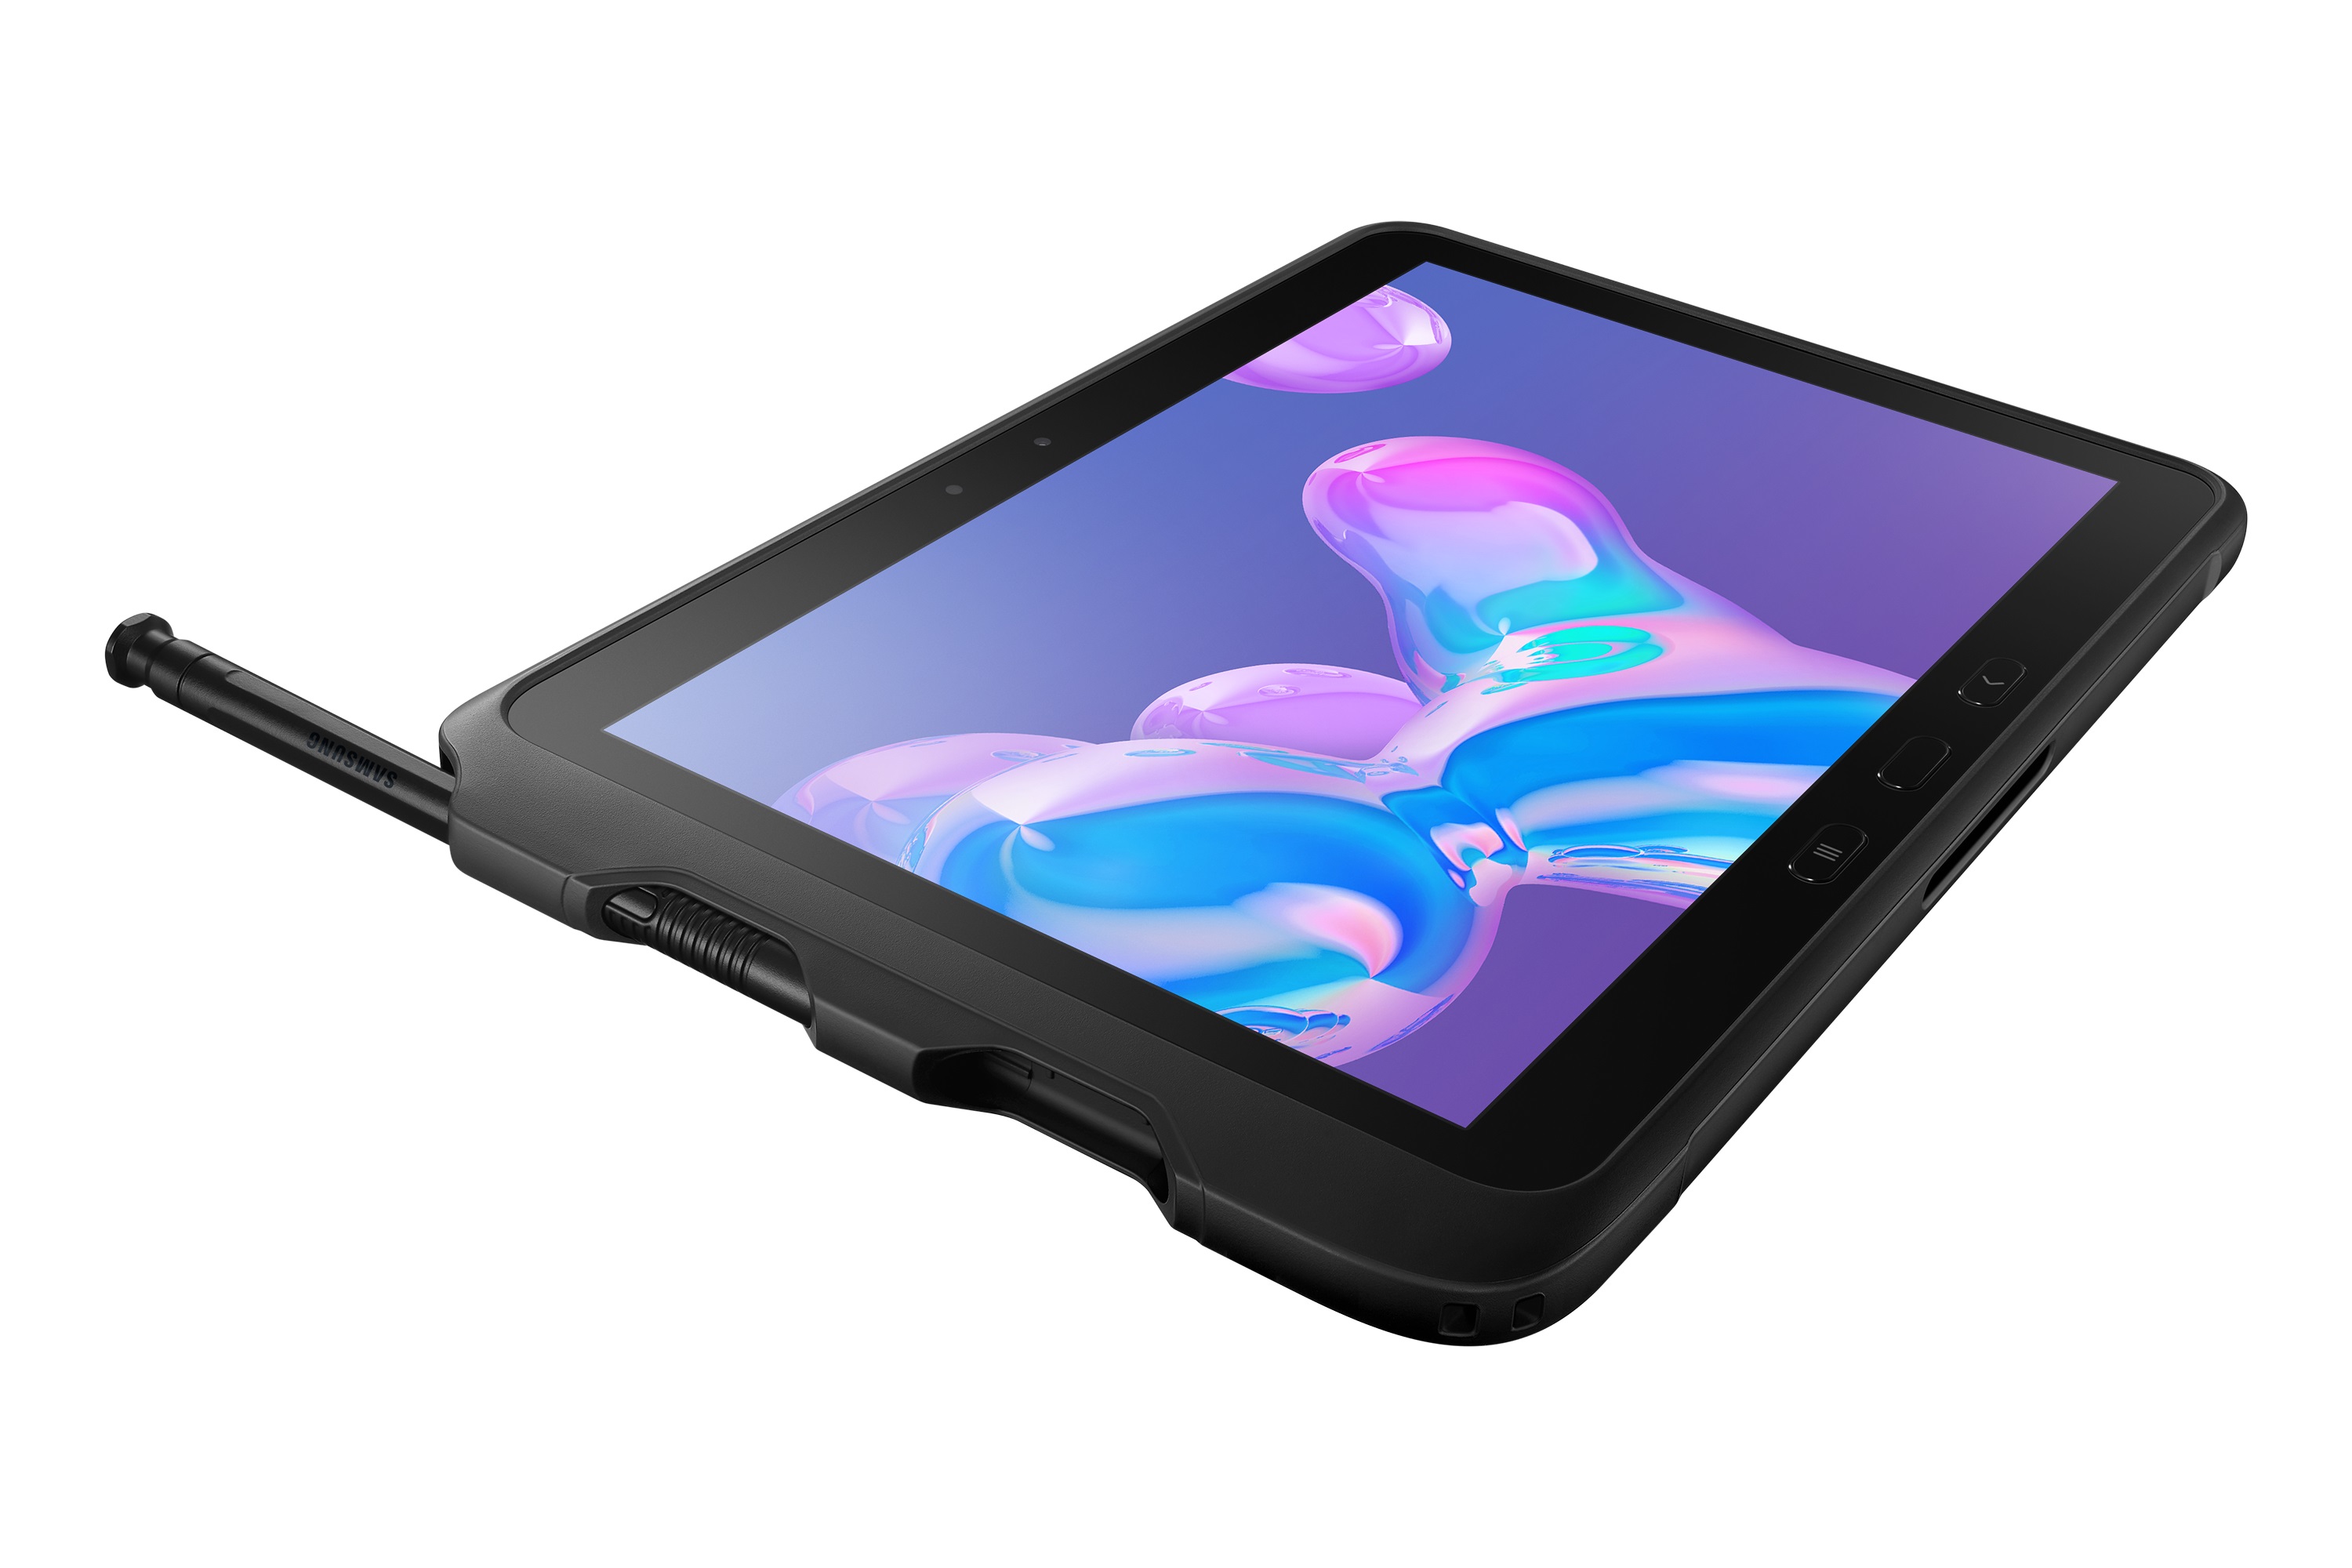 Samsung Galaxy Tab Active Pro 10.1 WiFi - T540, Fekete